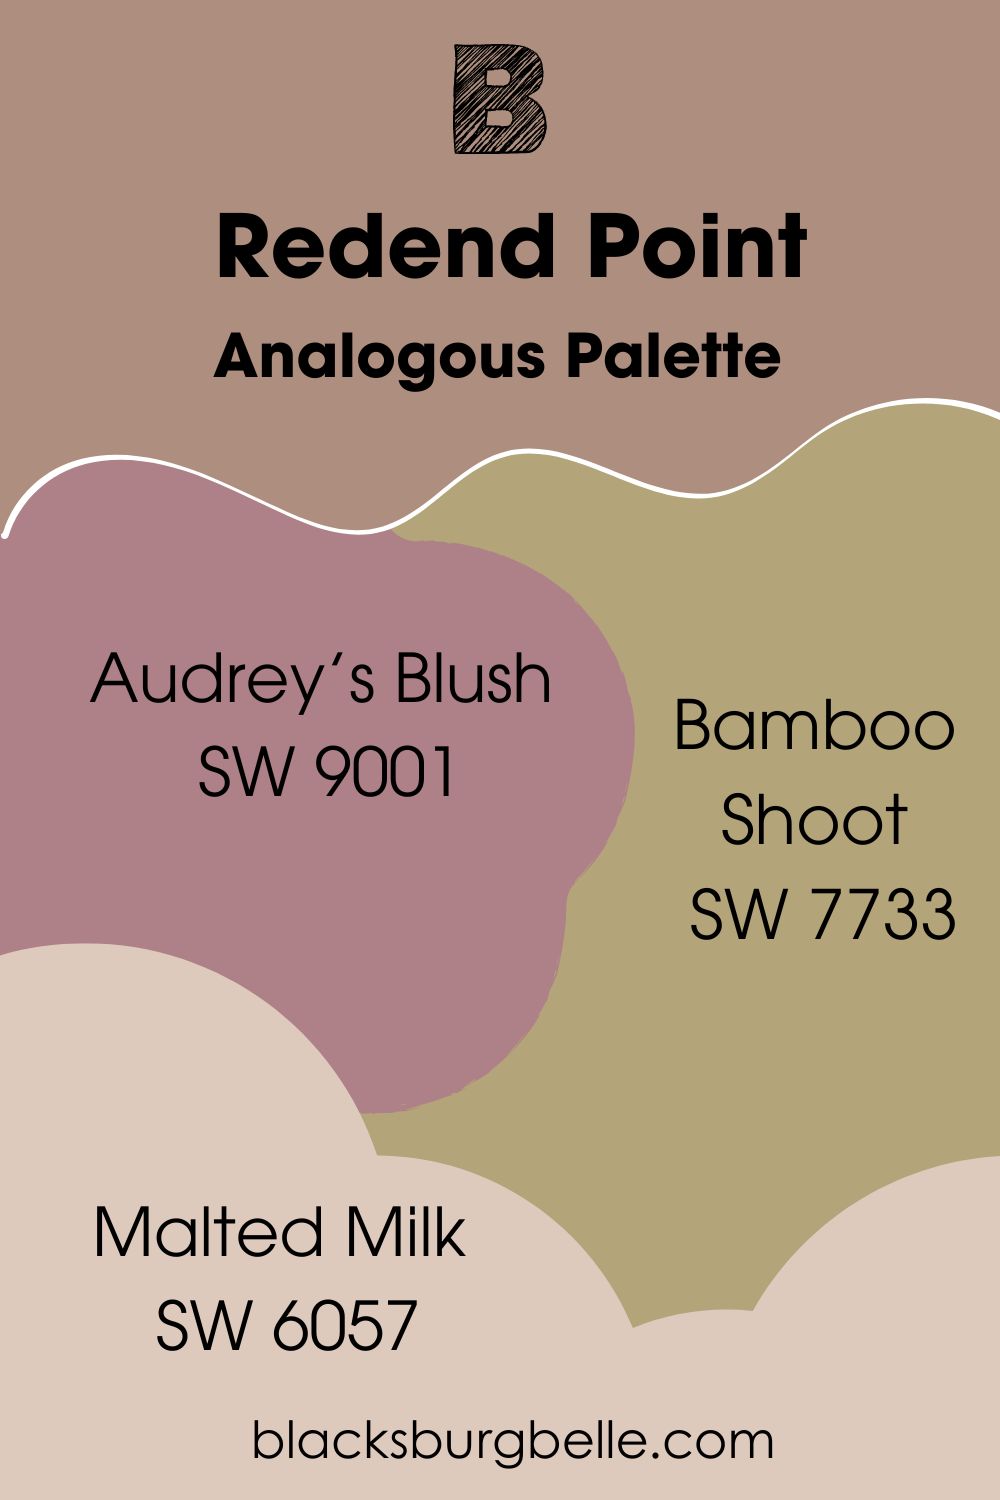 Analogous Palette